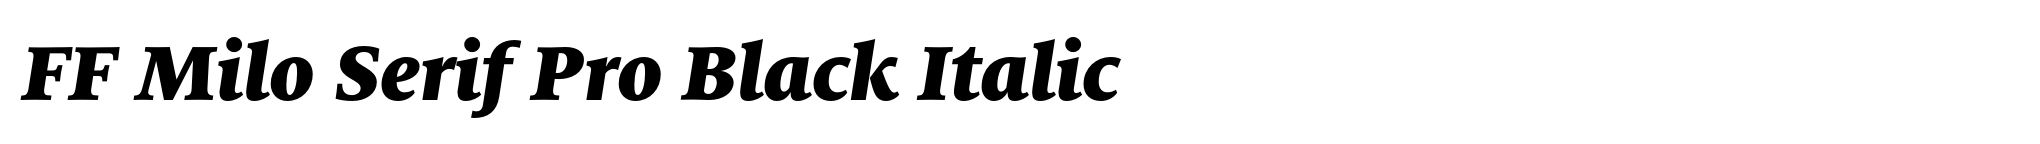 FF Milo Serif Pro Black Italic image